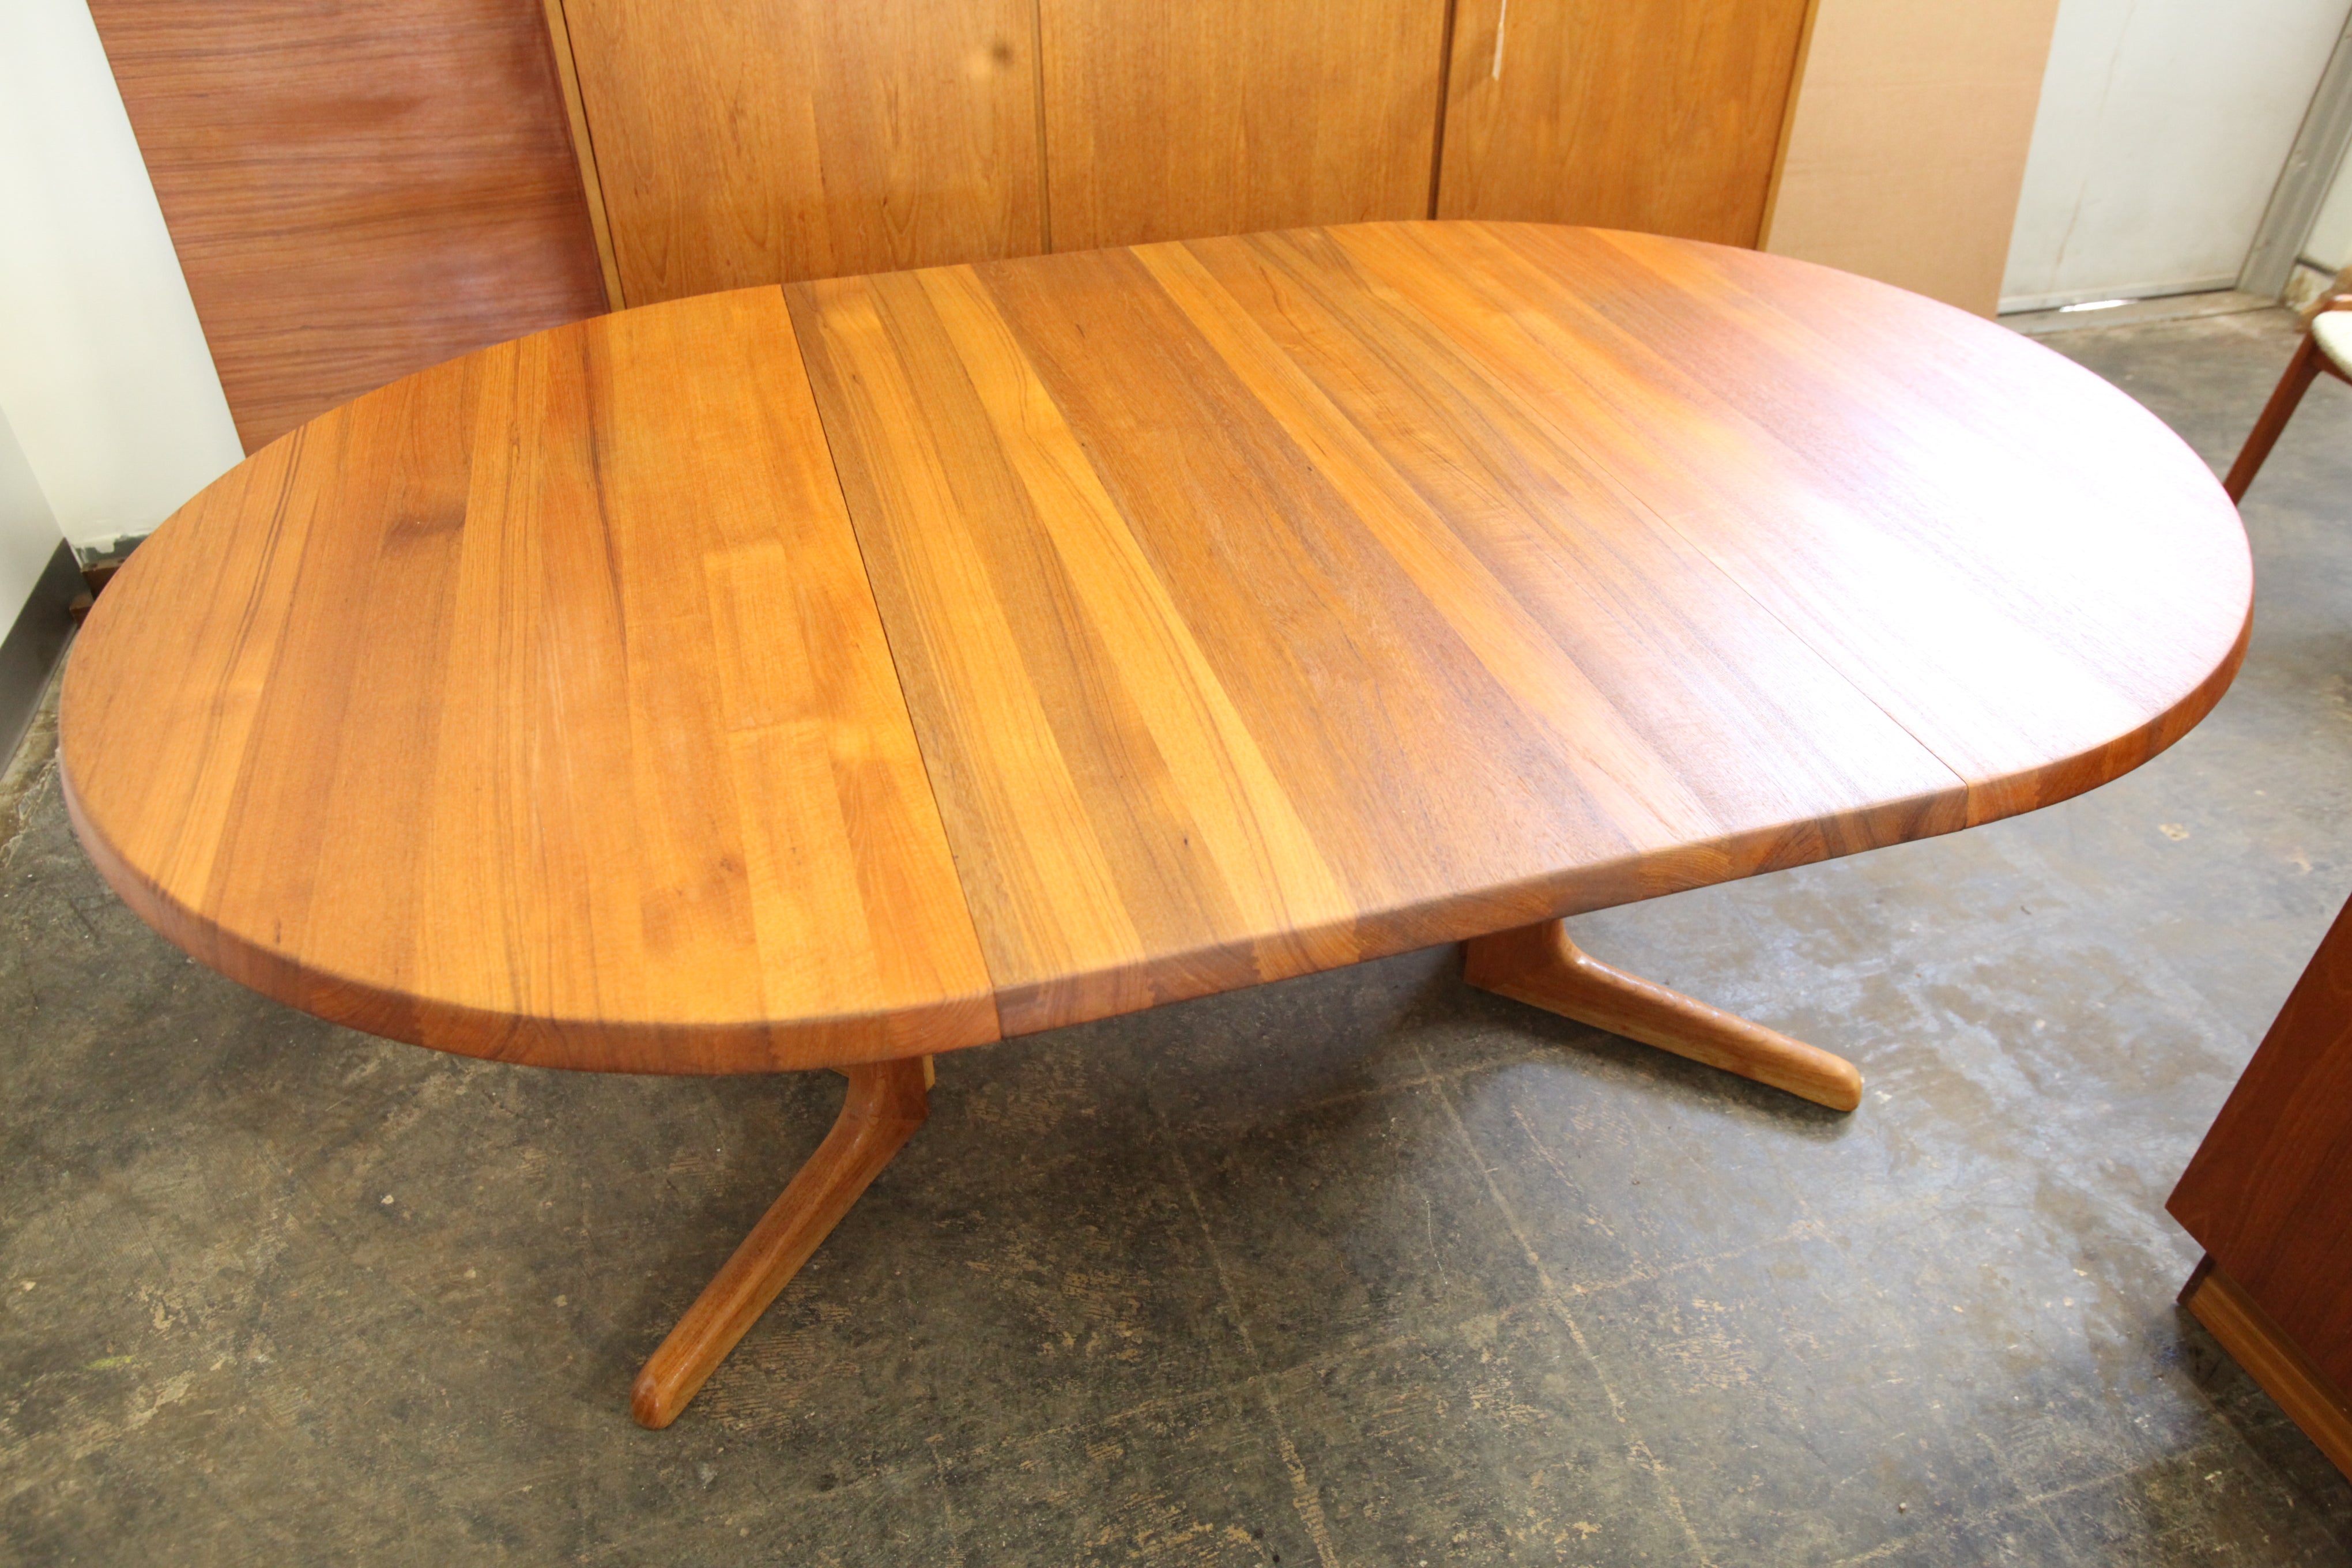 Vintage Round "Rare Solid Teak" Dining Table w/ Large Leaf (46.5" Dia. or 72"x46.5" w/ Leaf)